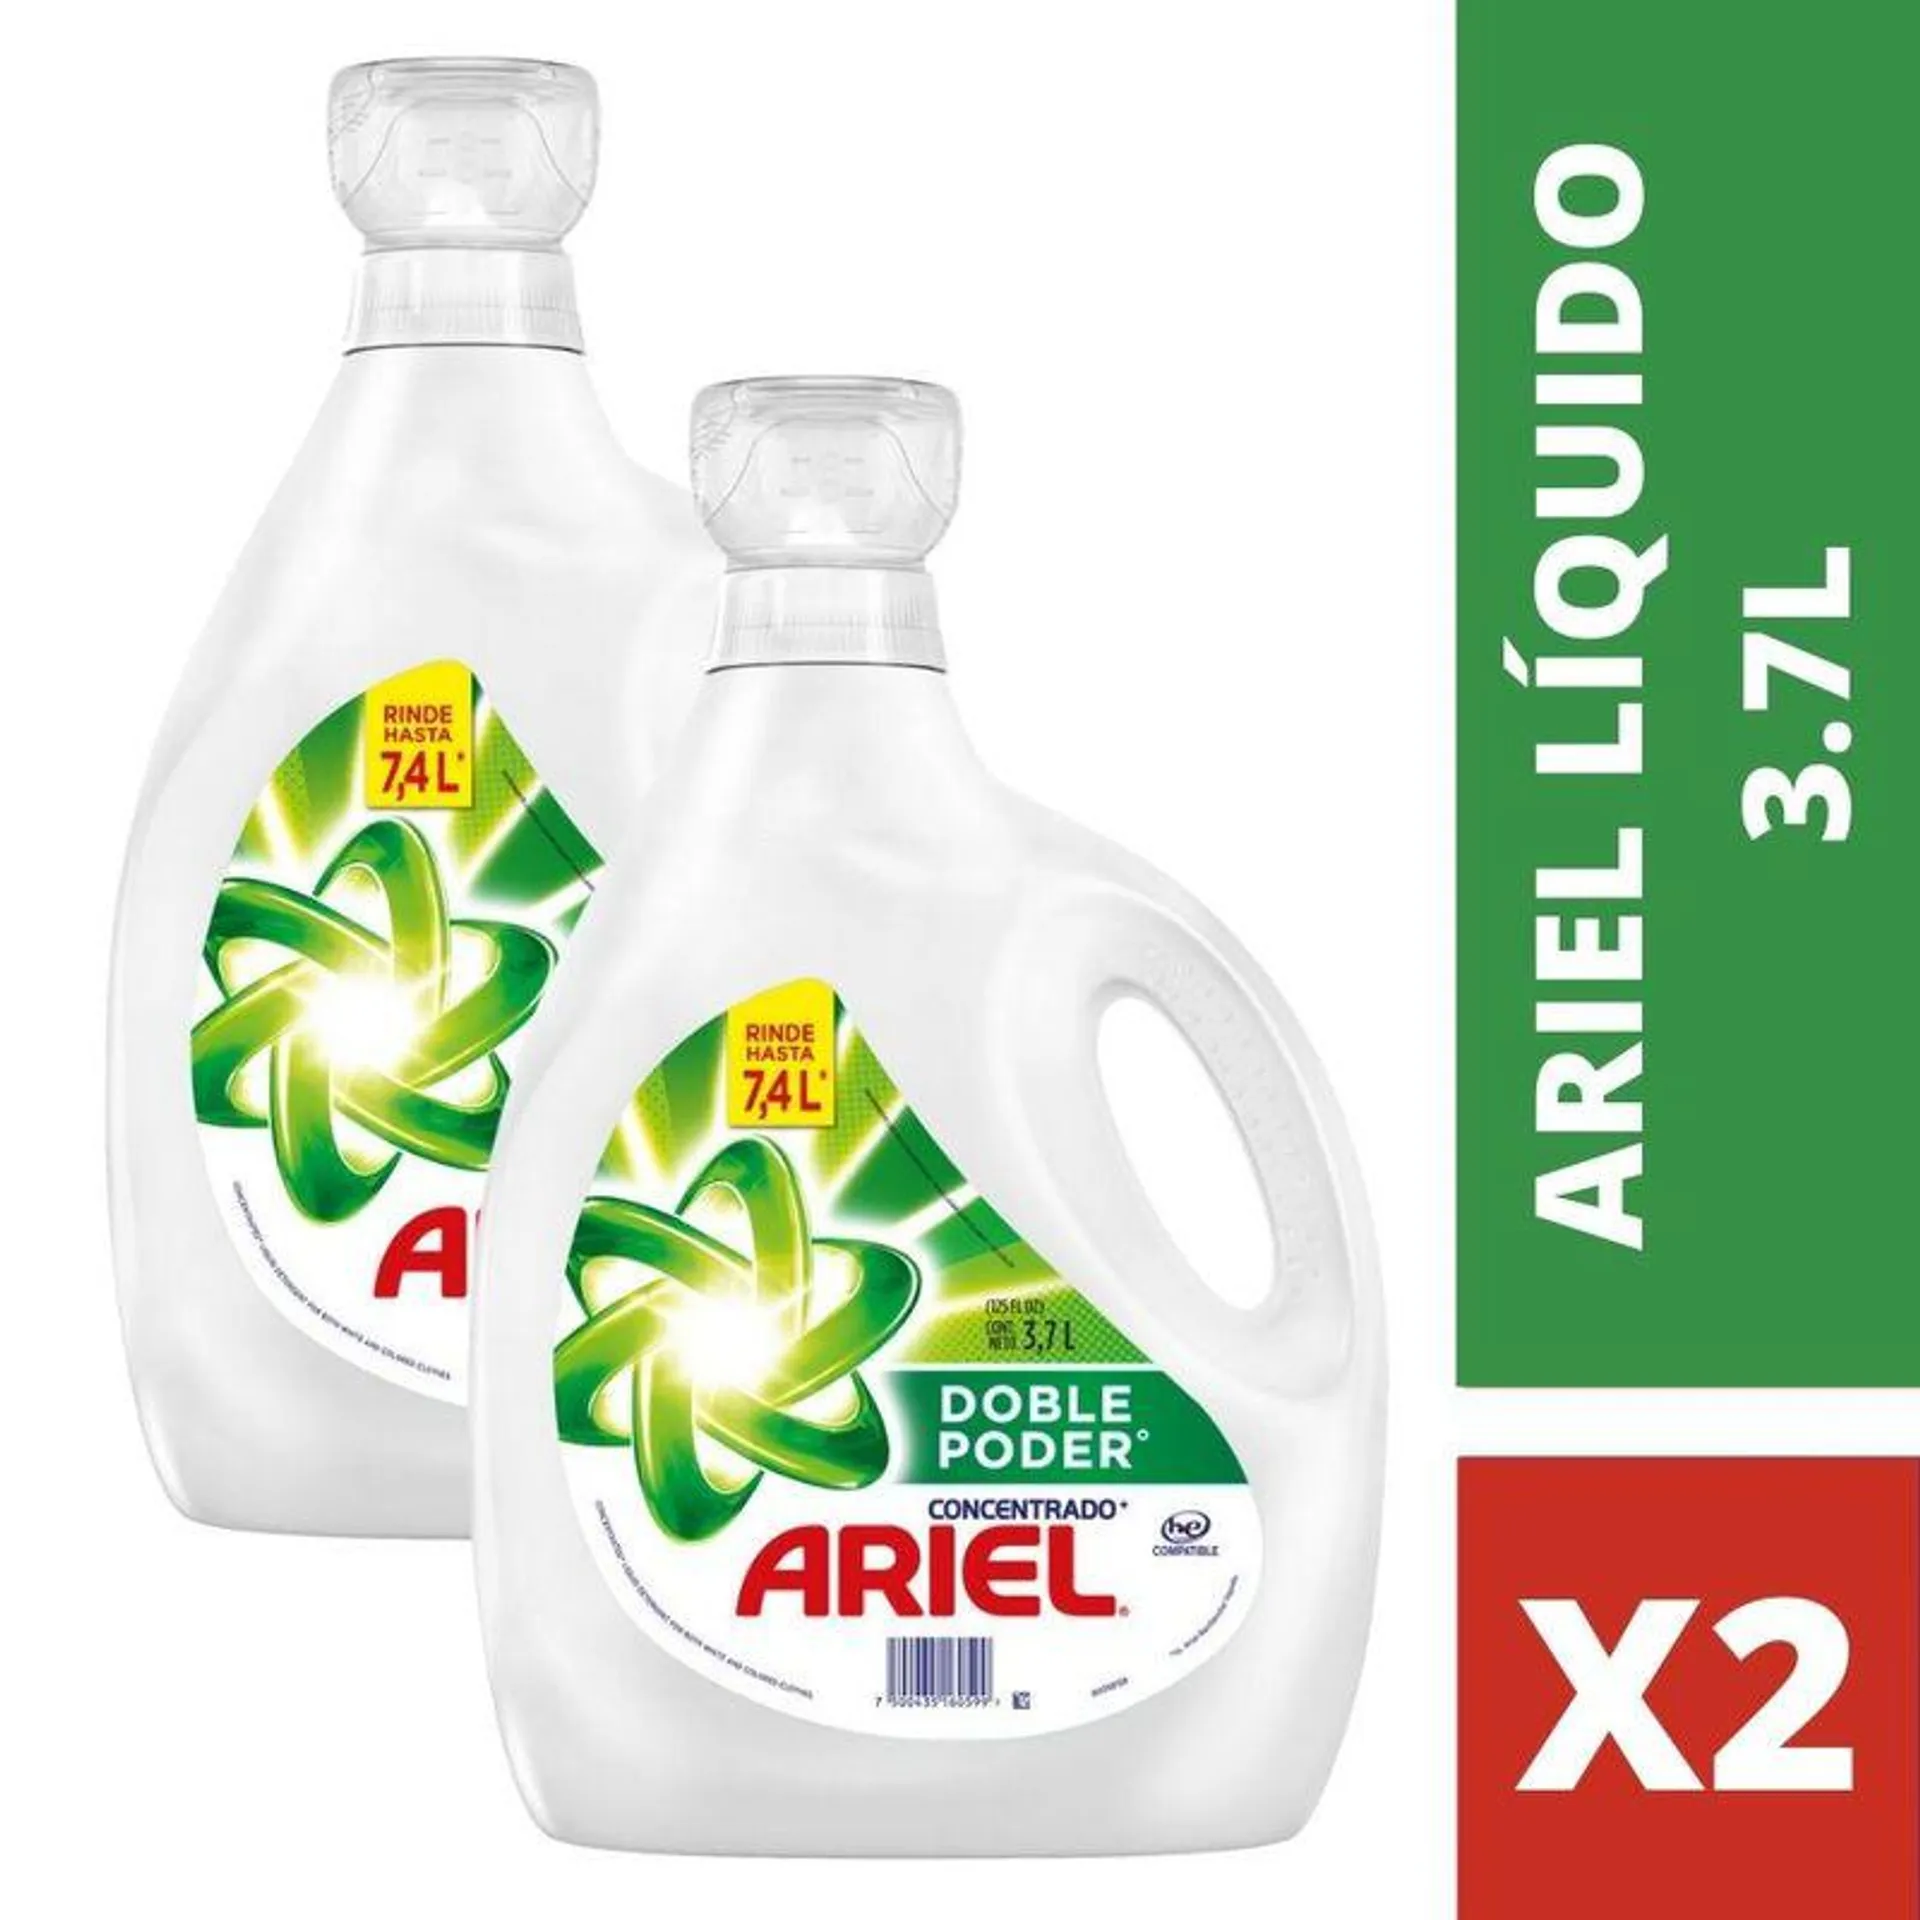 Twopack Detergente Líquido Concentrado Ariel Doble Poder 3.7L